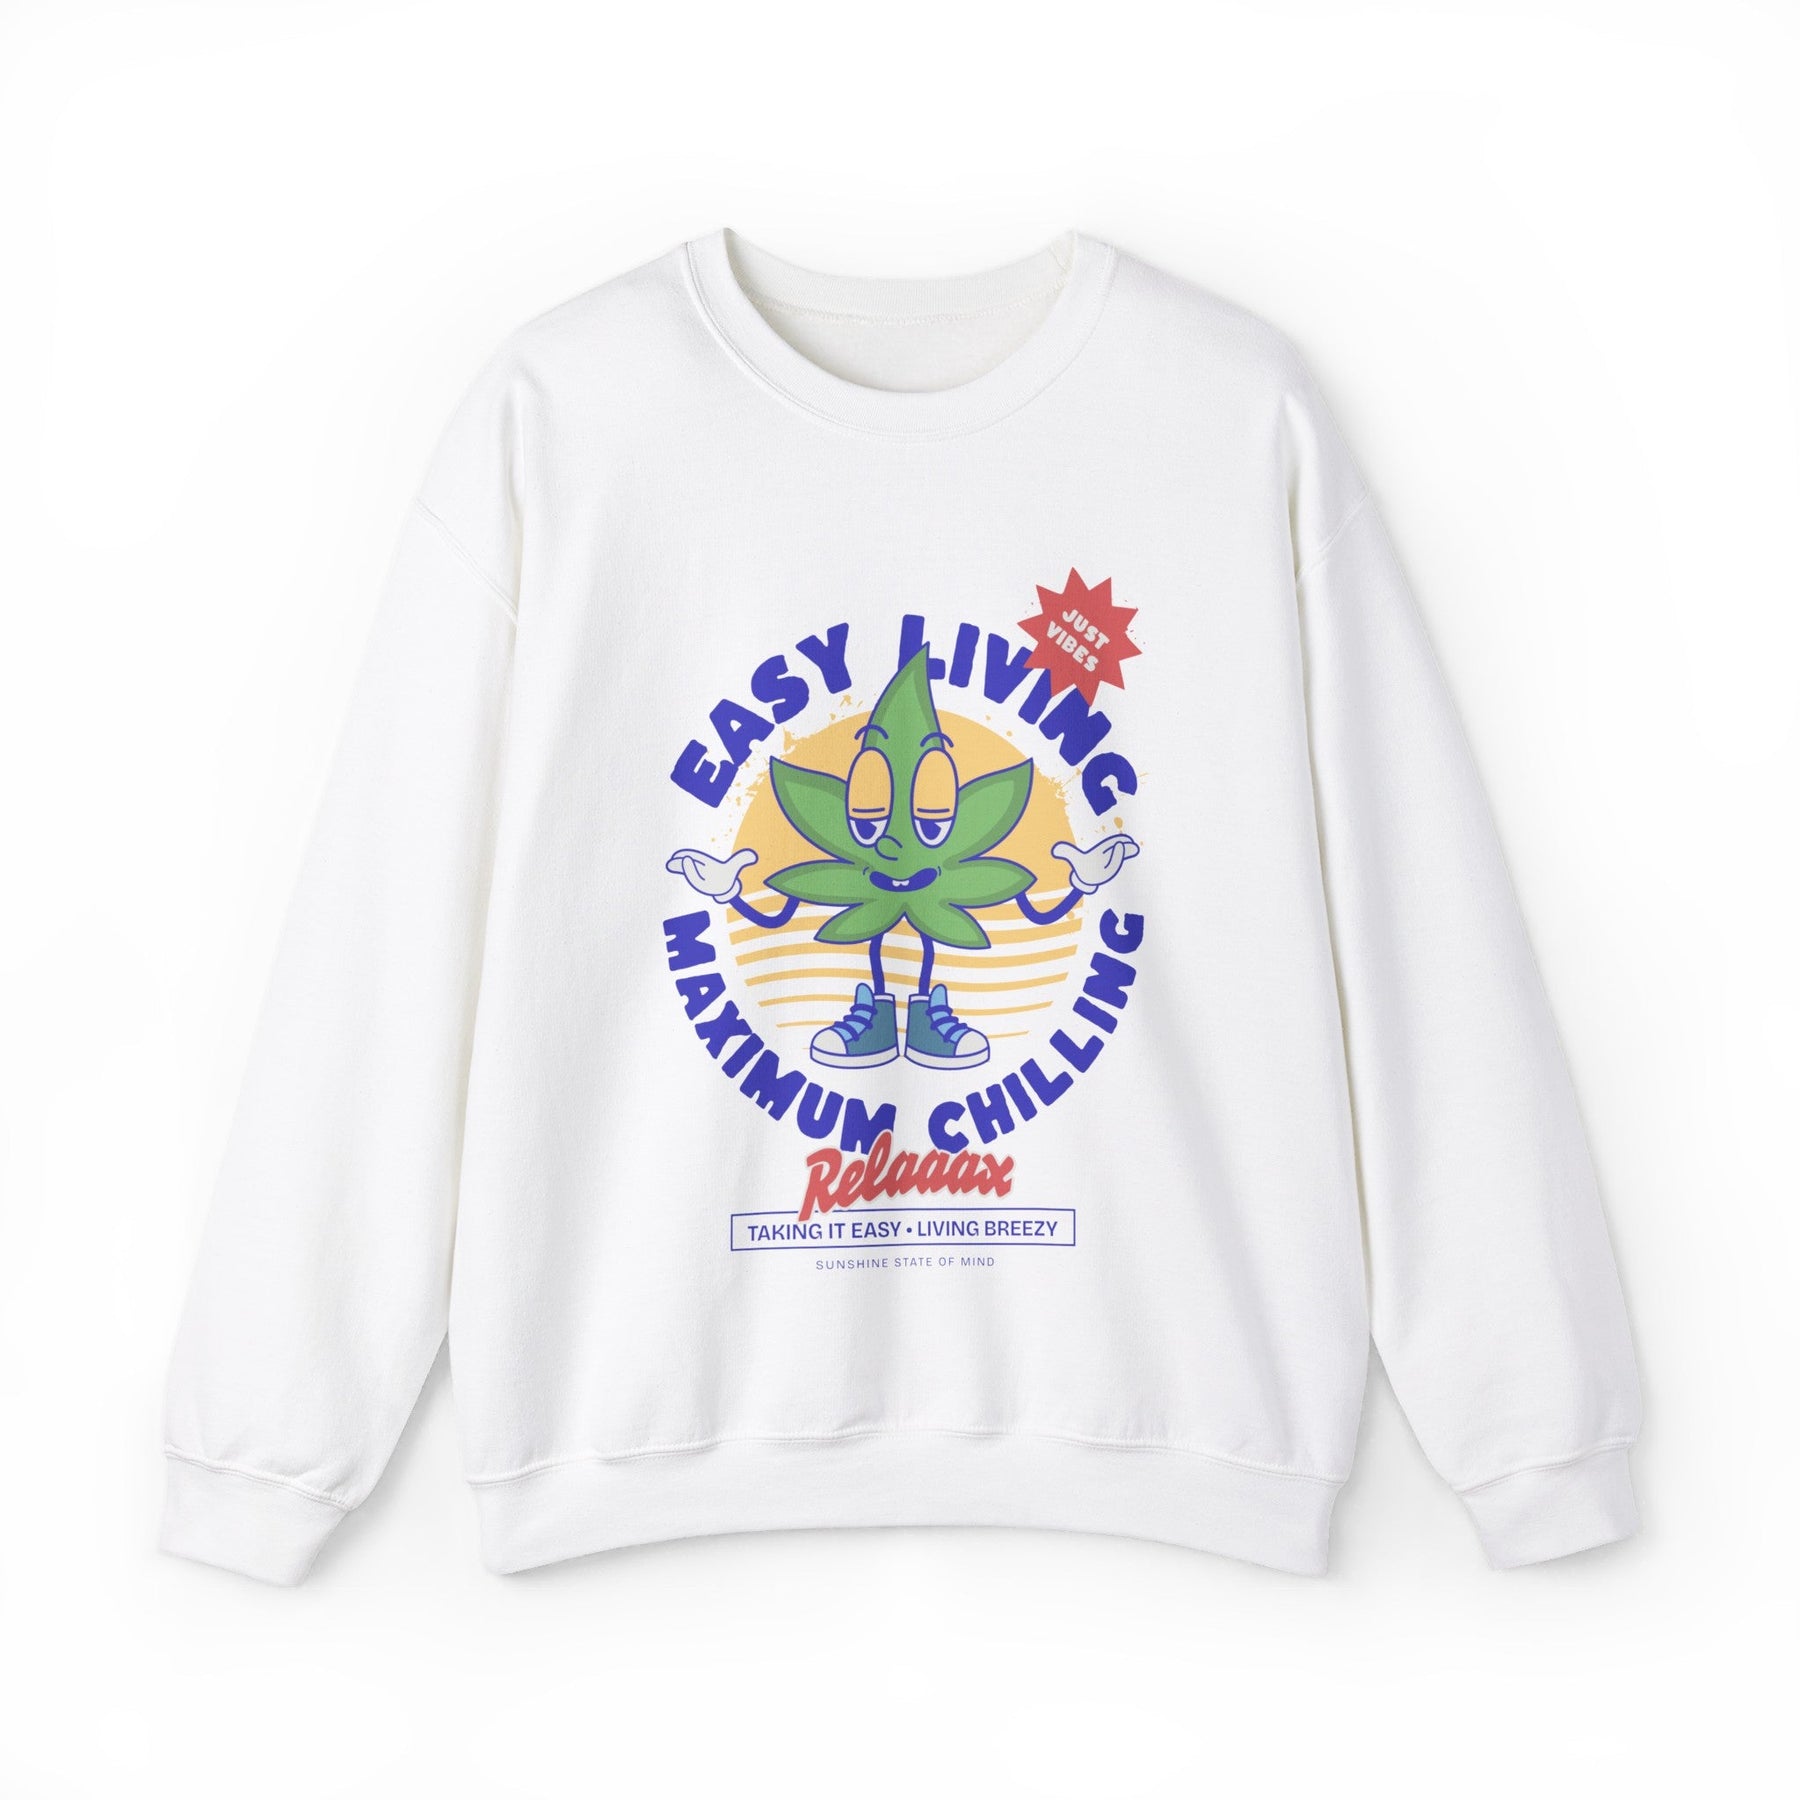 Easy Living, Maximum Chilling - Pot leaf Crew Neck Sweatshirt - Goth Cloth Co.Sweatshirt16039667273985783541